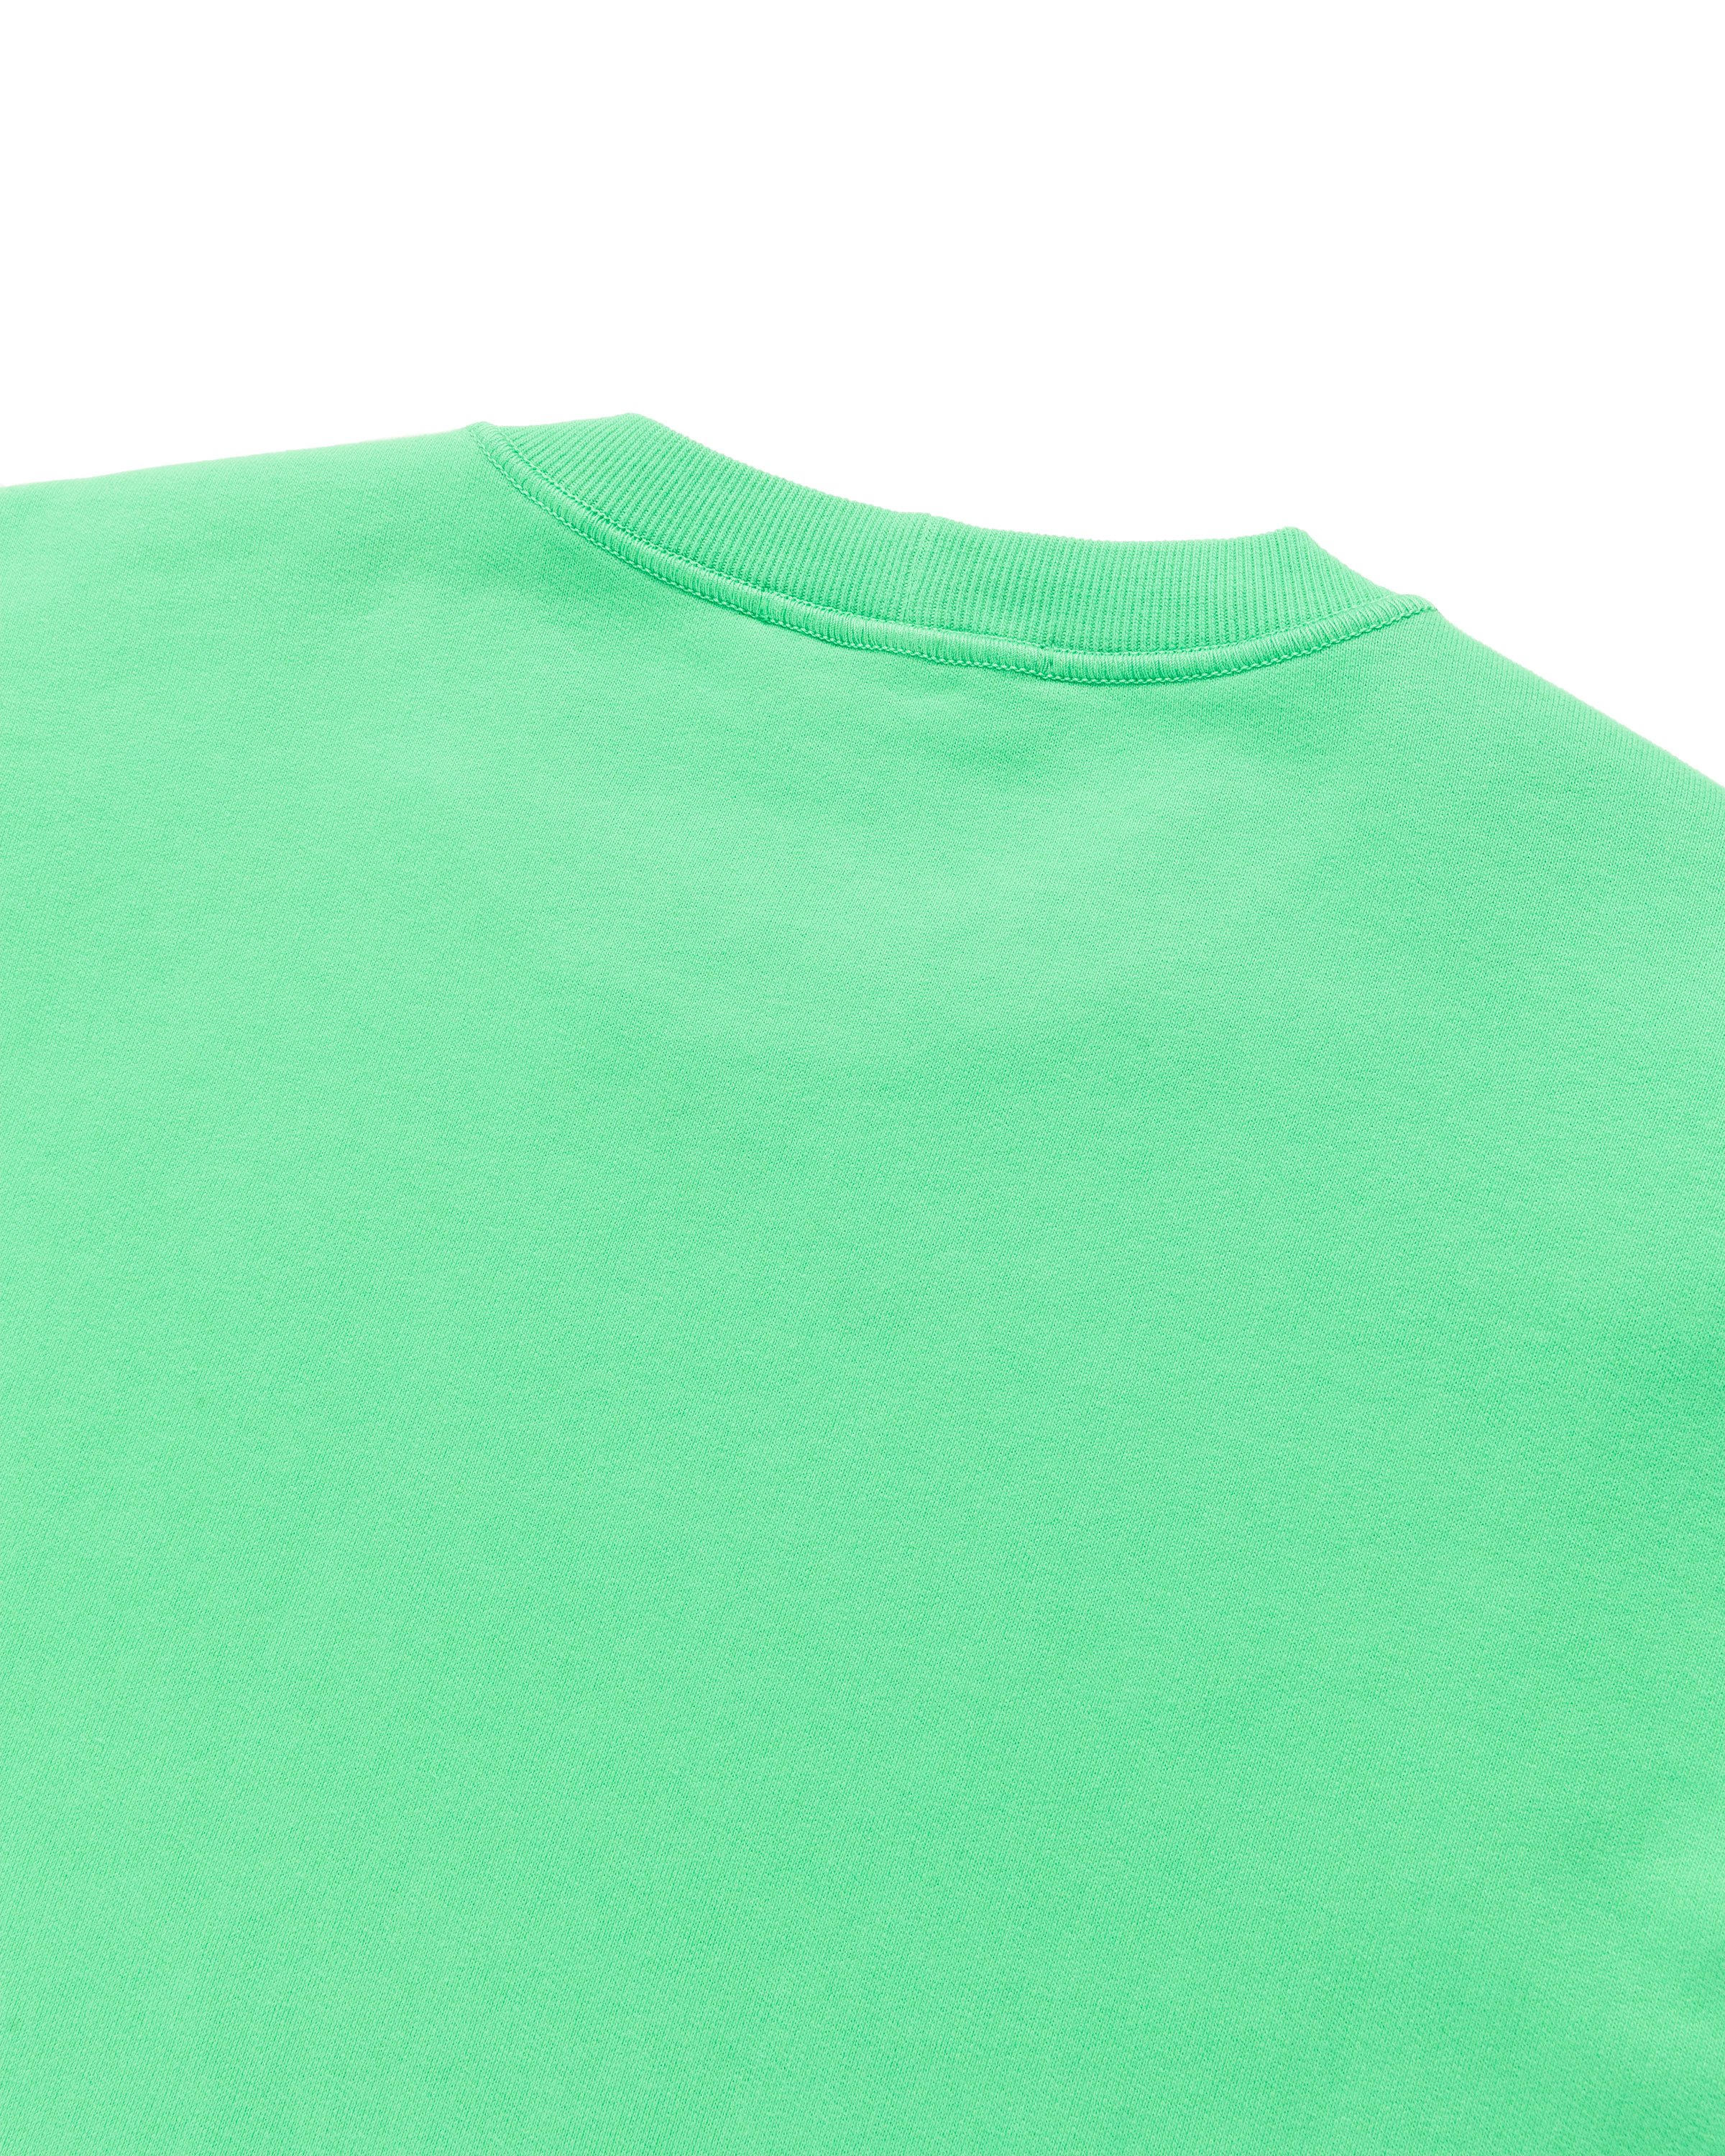 Stone Island - Garment-Dyed Fleece Crewneck Sweatshirt Light Green - Clothing - Green - Image 4